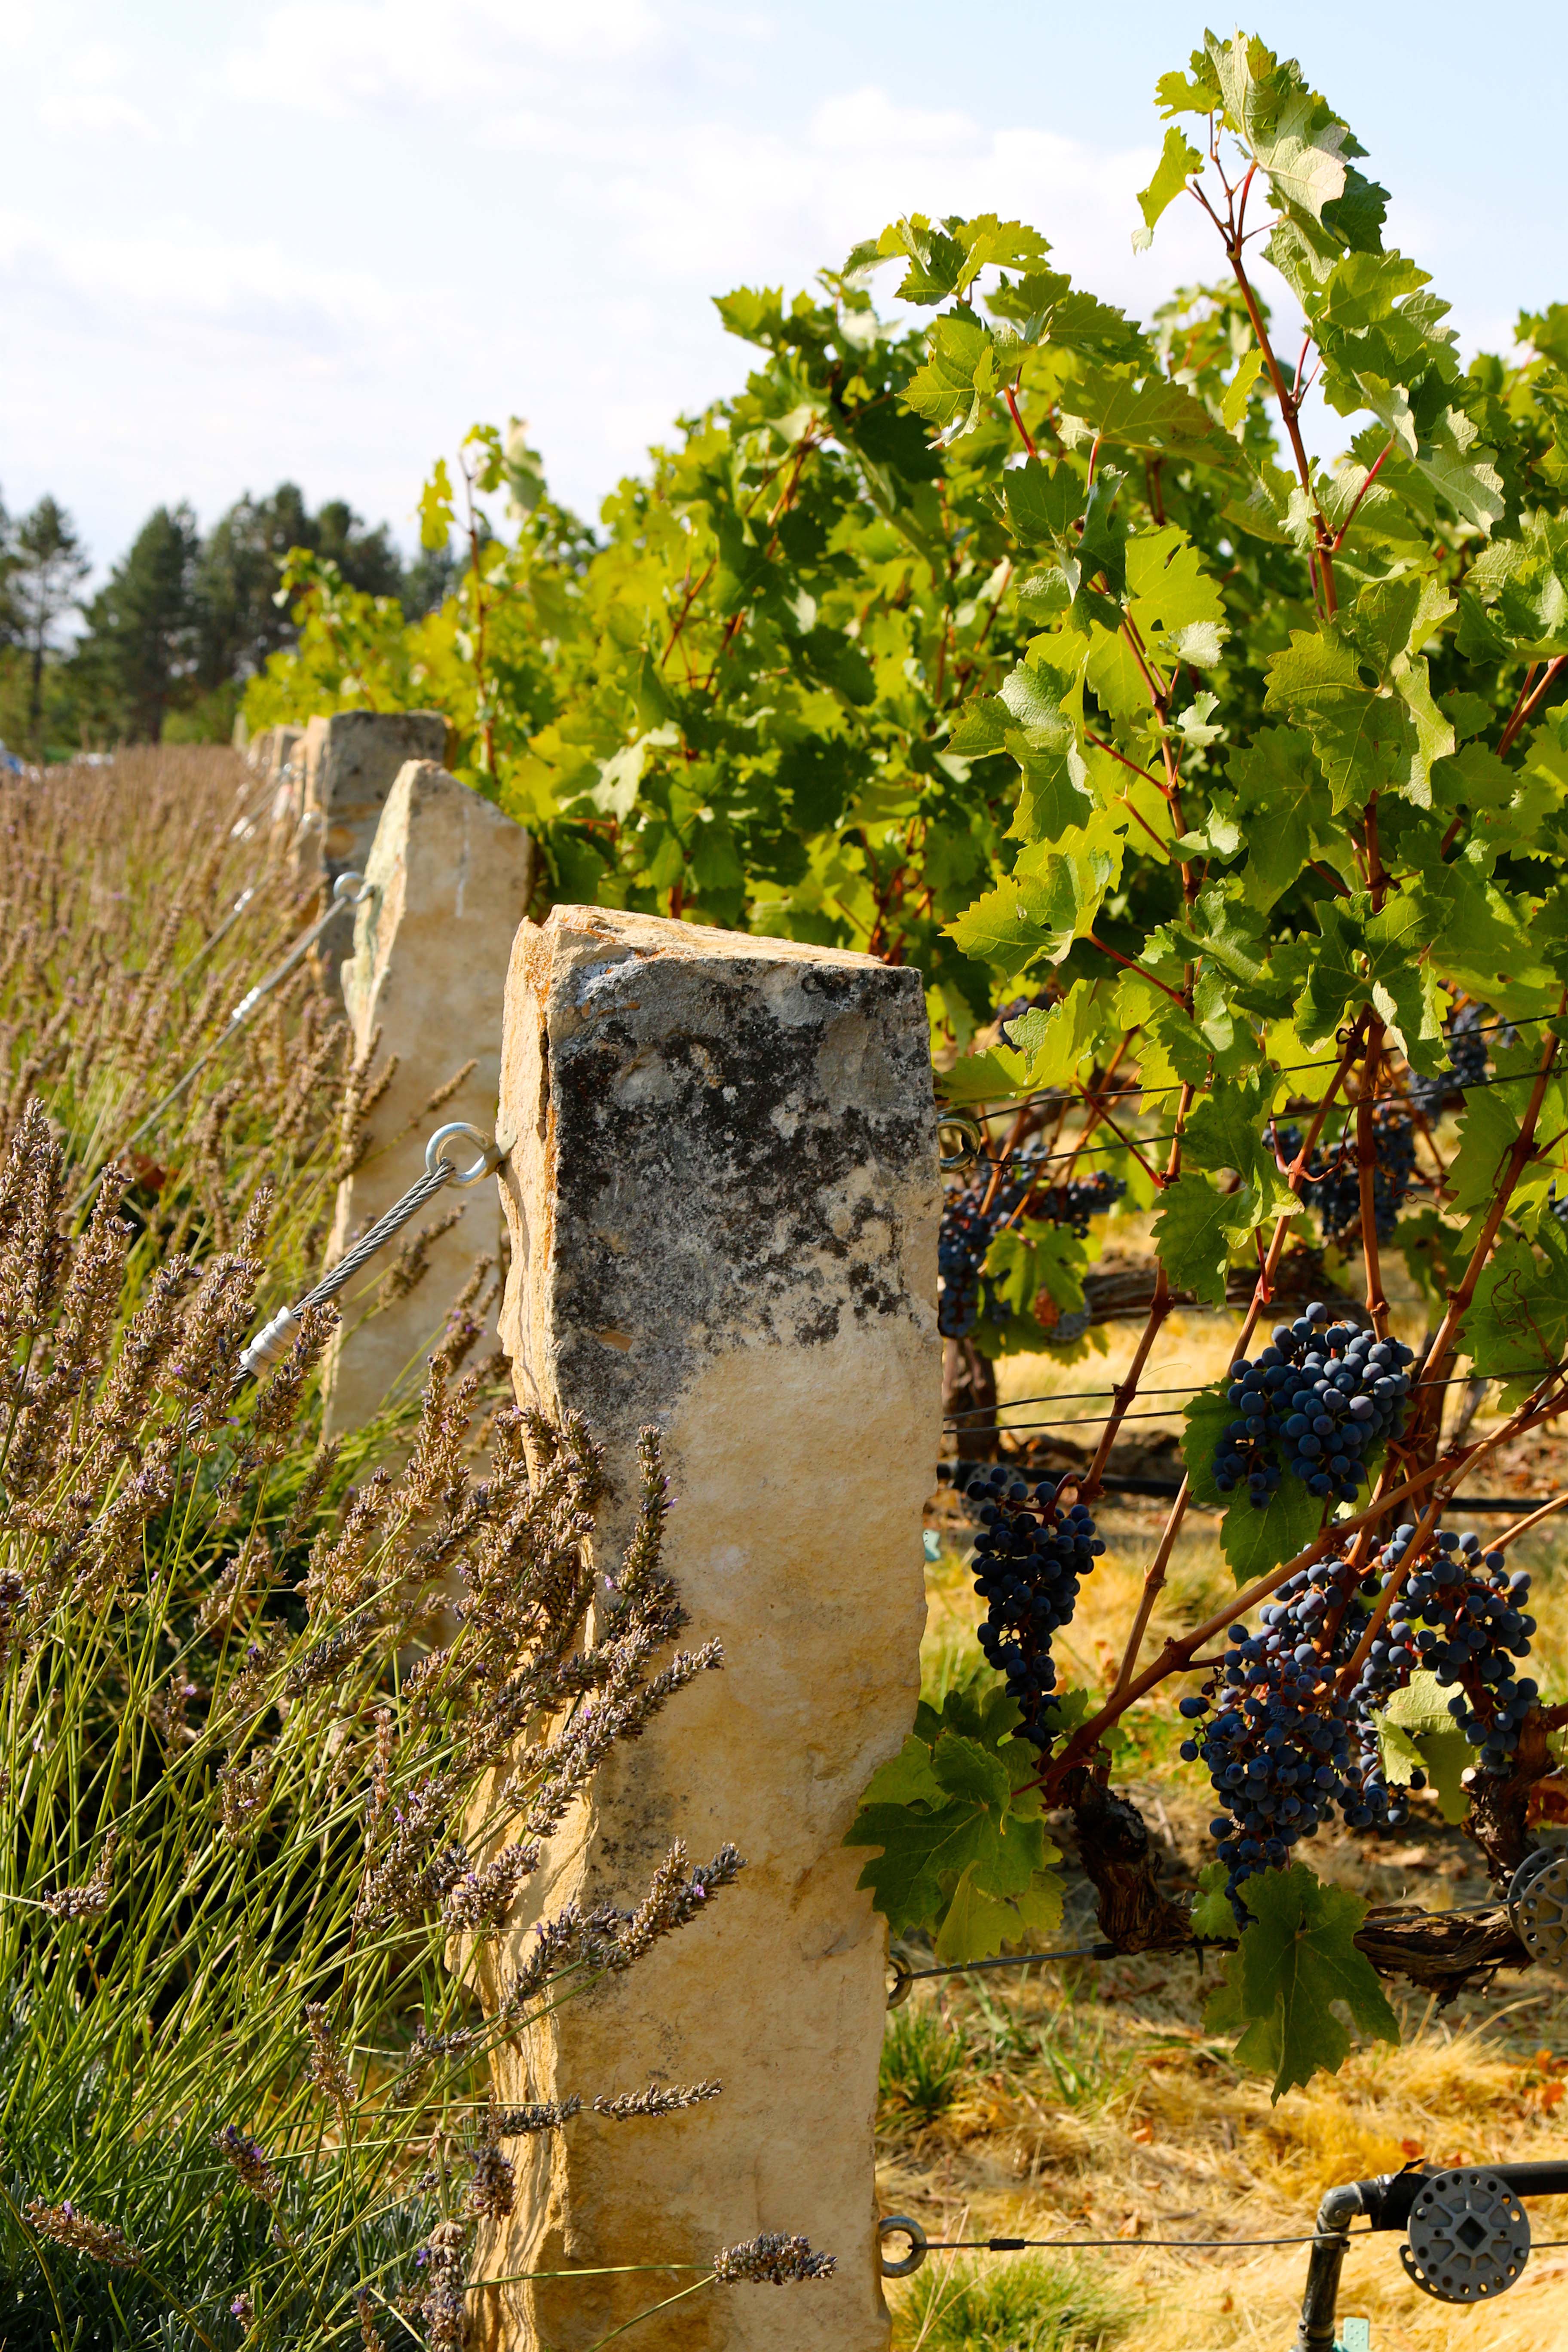 Basalt vertical slabs mark each row of grapes. (Photo by TTuttle)